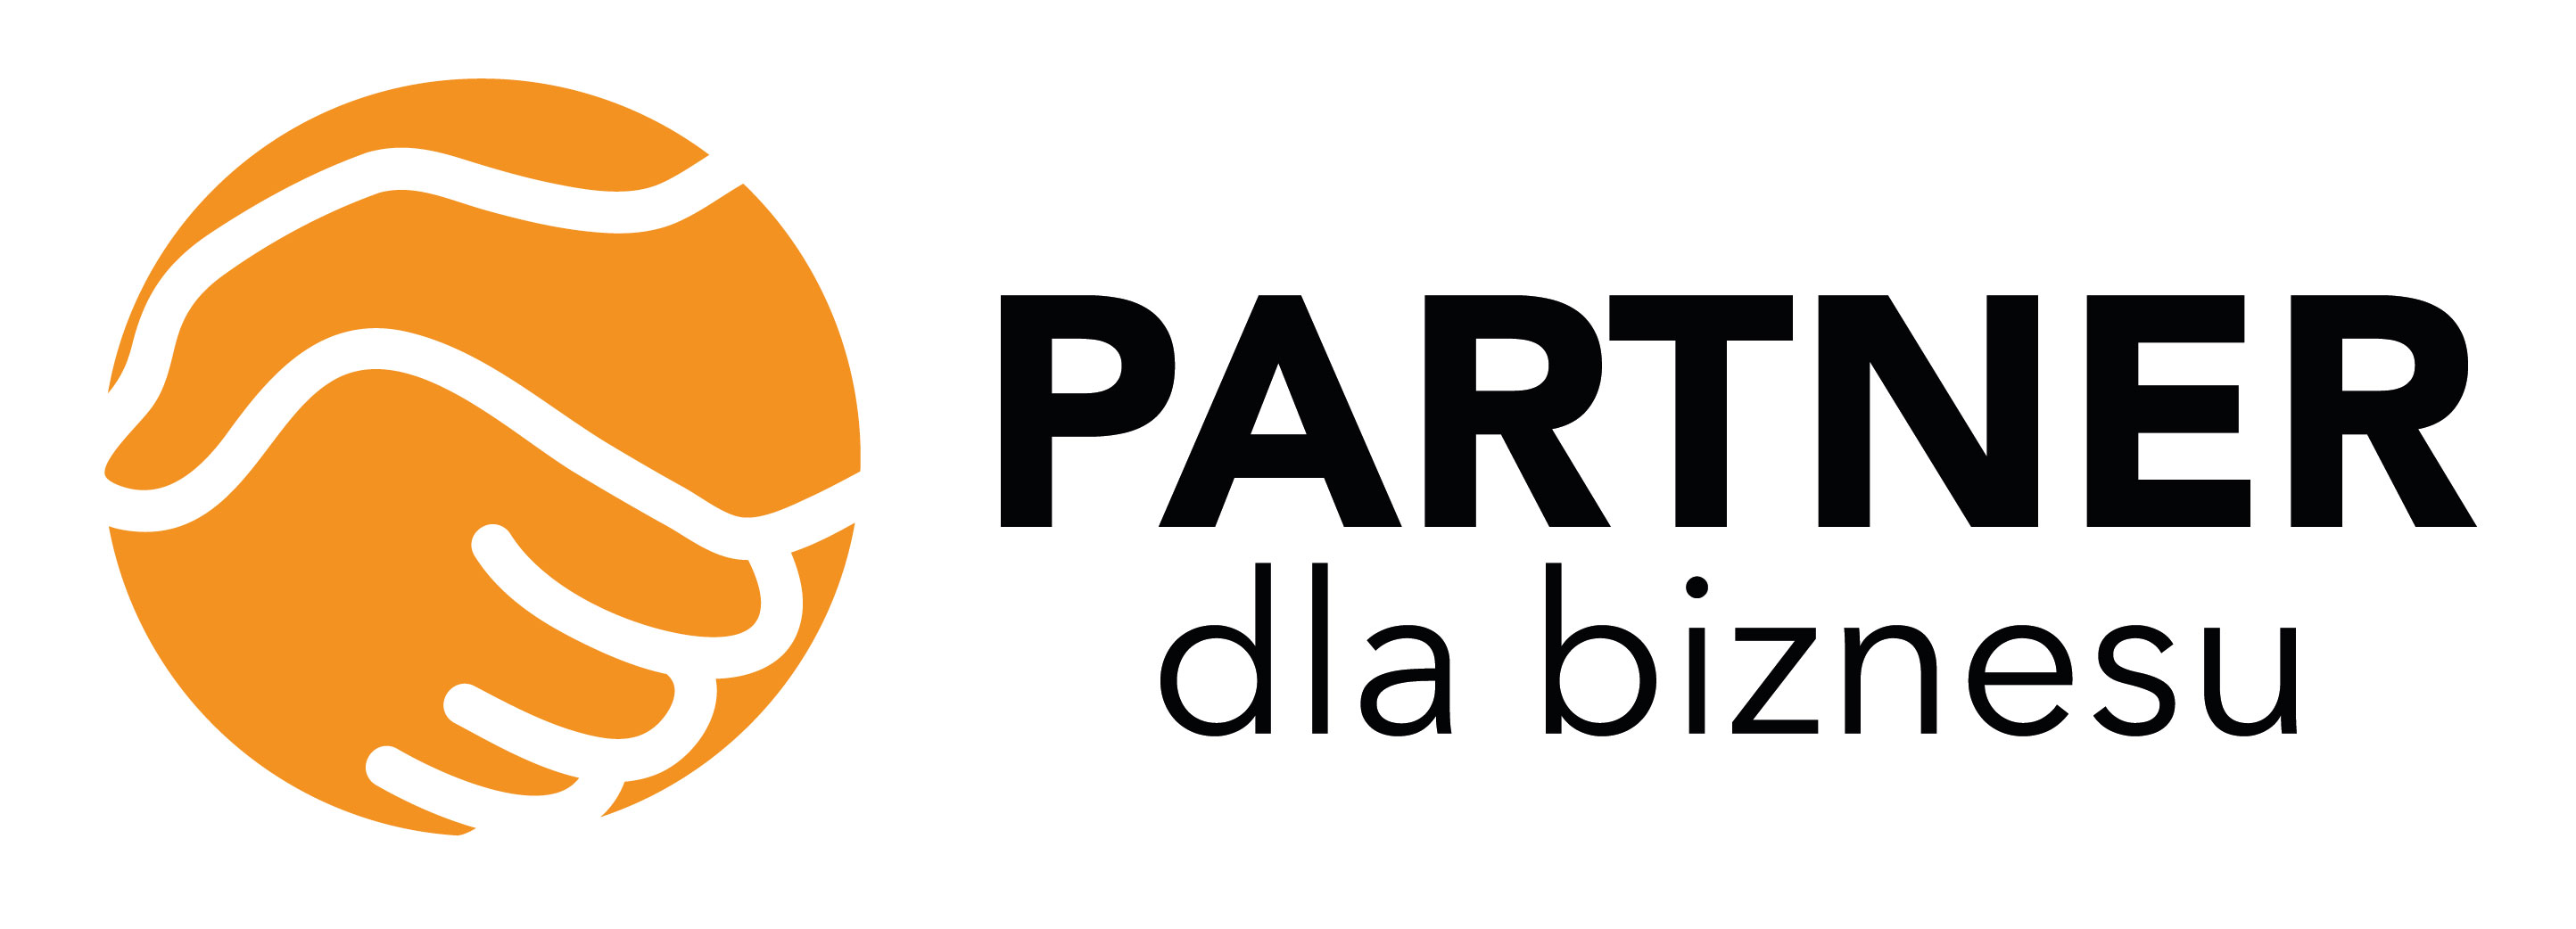 partnerdlabiznesu.pl